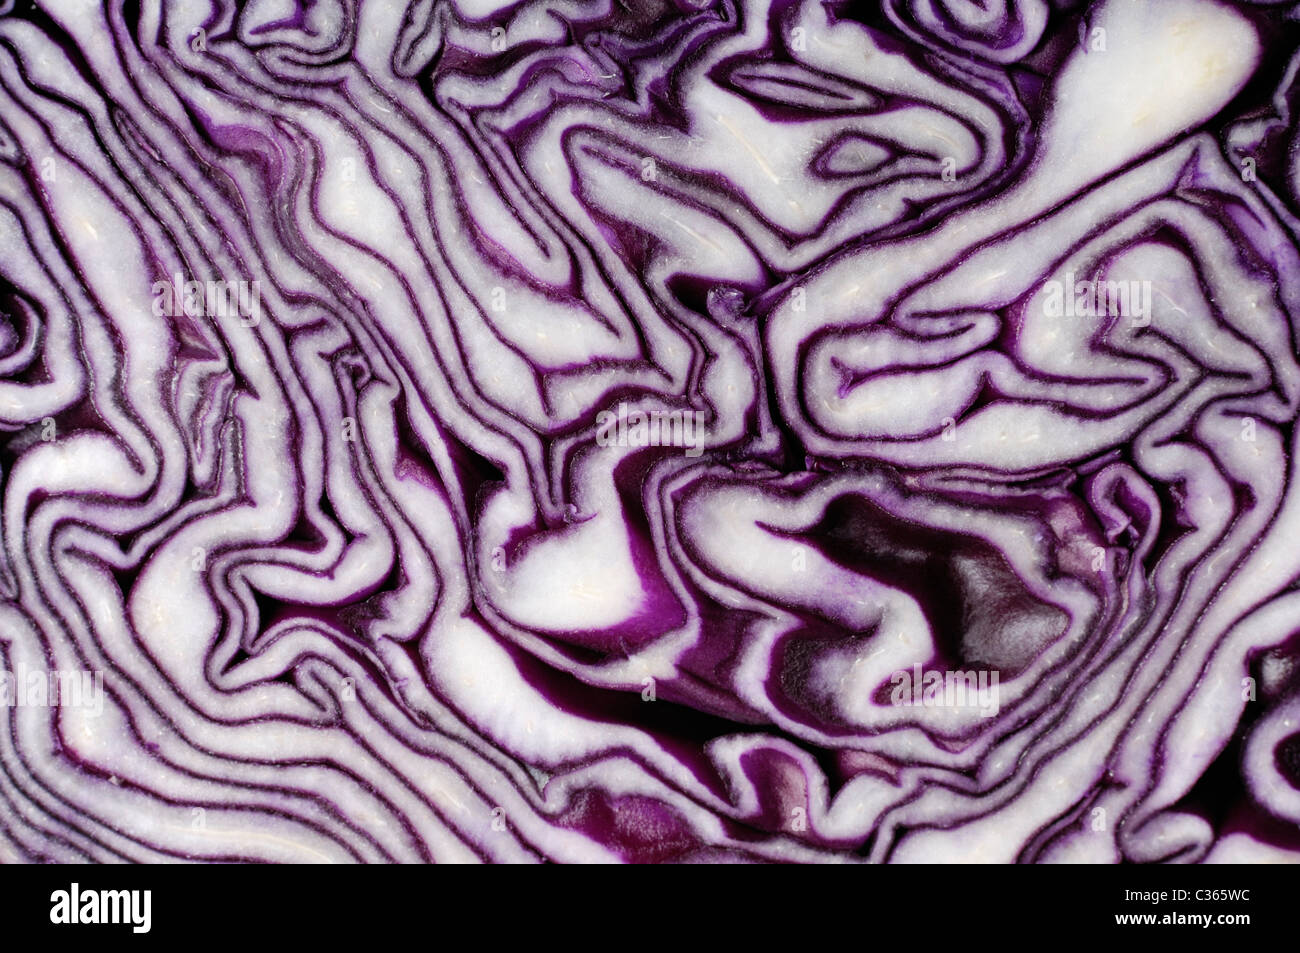 Rotkohl Slice Nahaufnahme abstrakte organische Textur Hintergrund Brassica Oleracea var. Capitata F. rubra Stockfoto